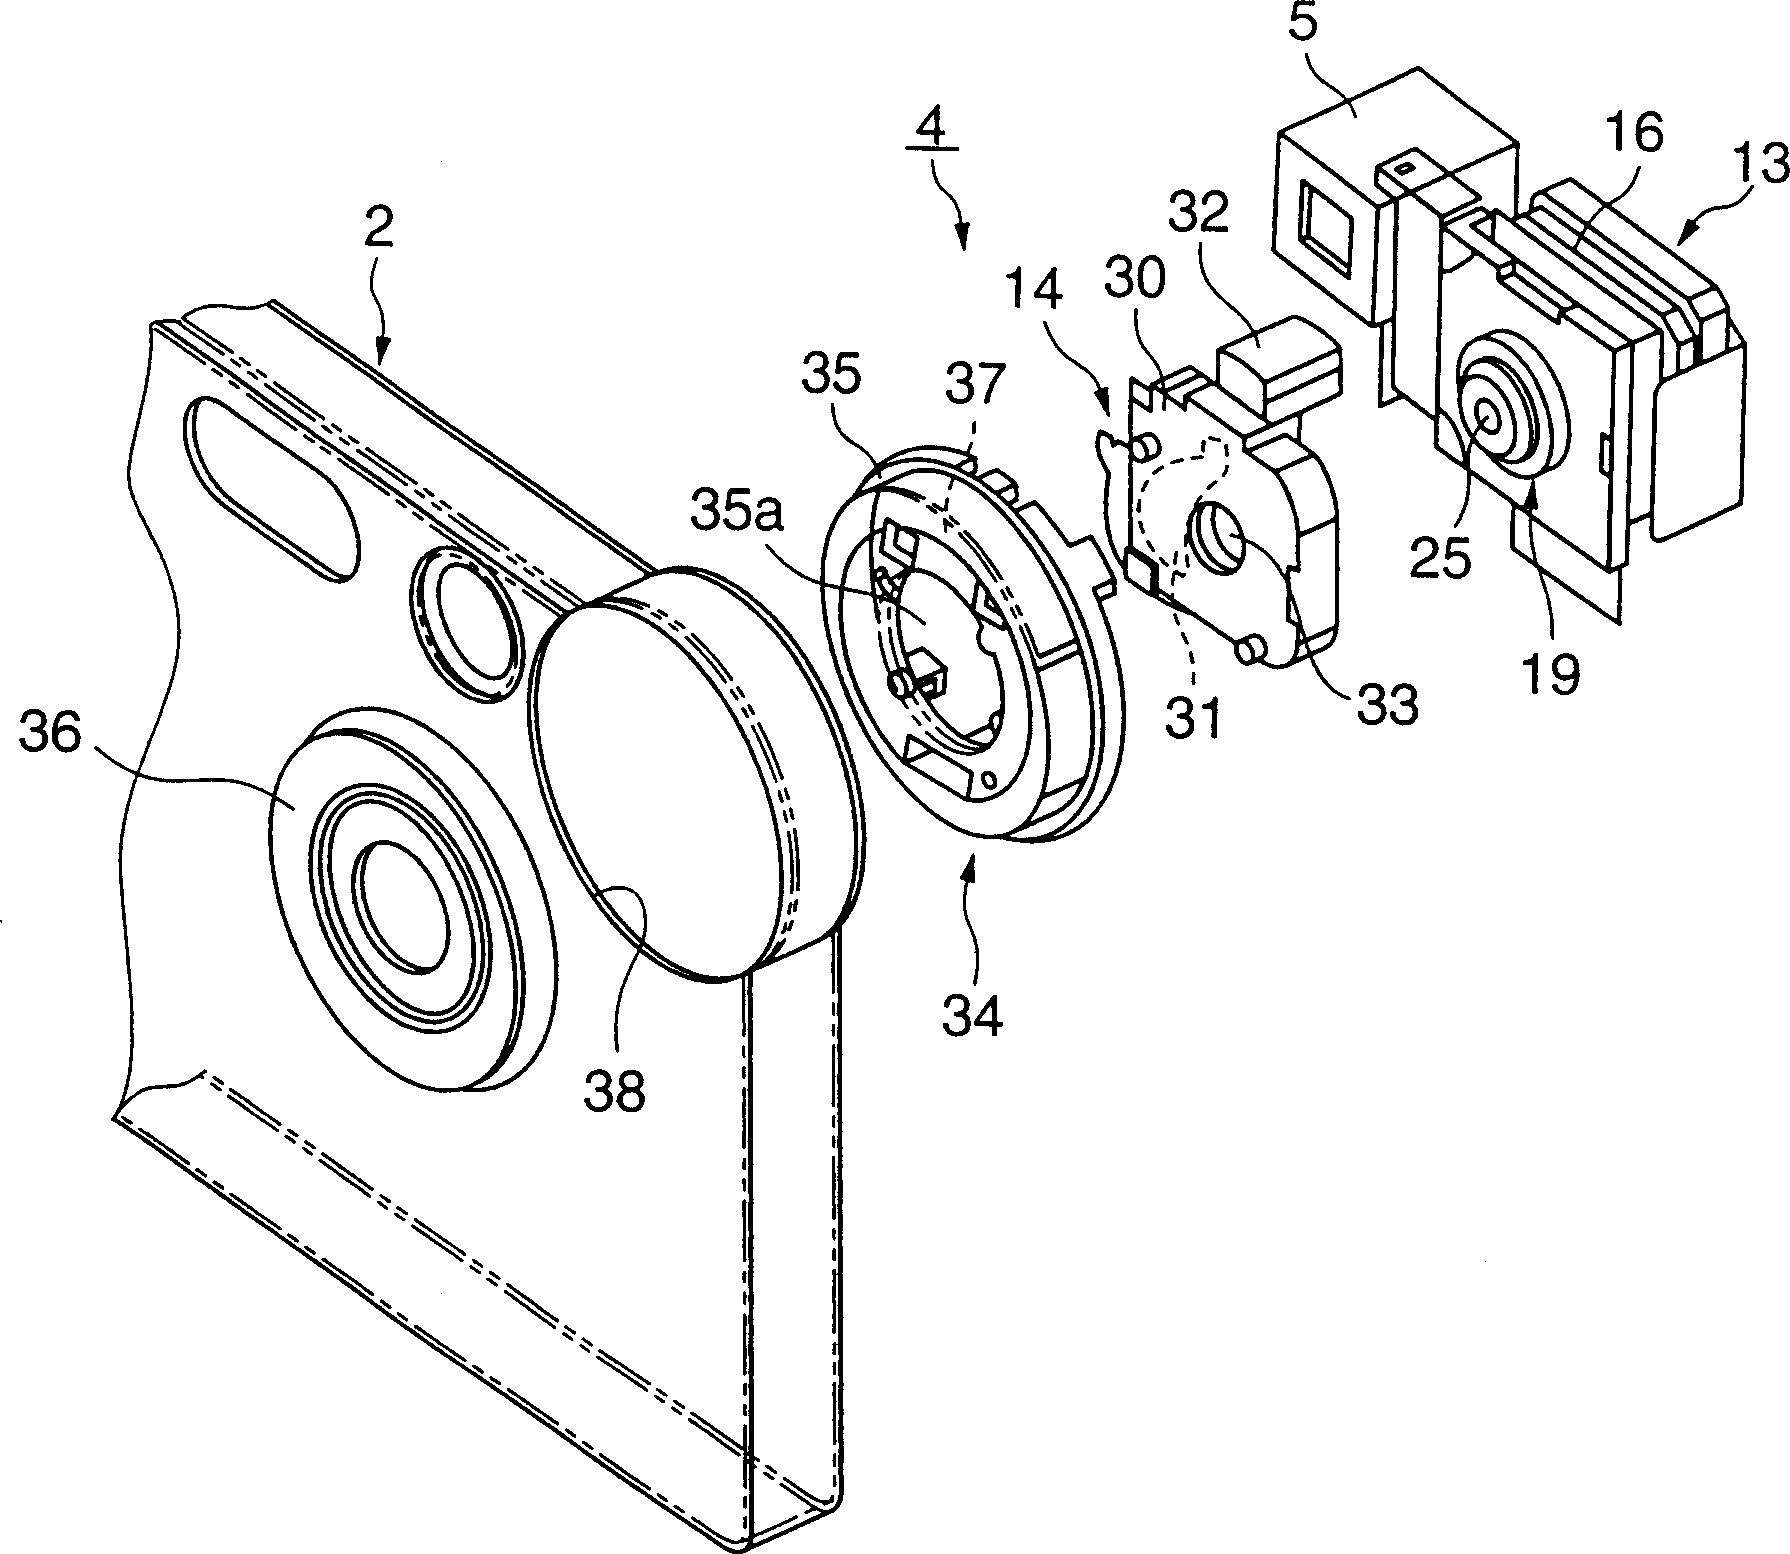 Camera device and camera lens